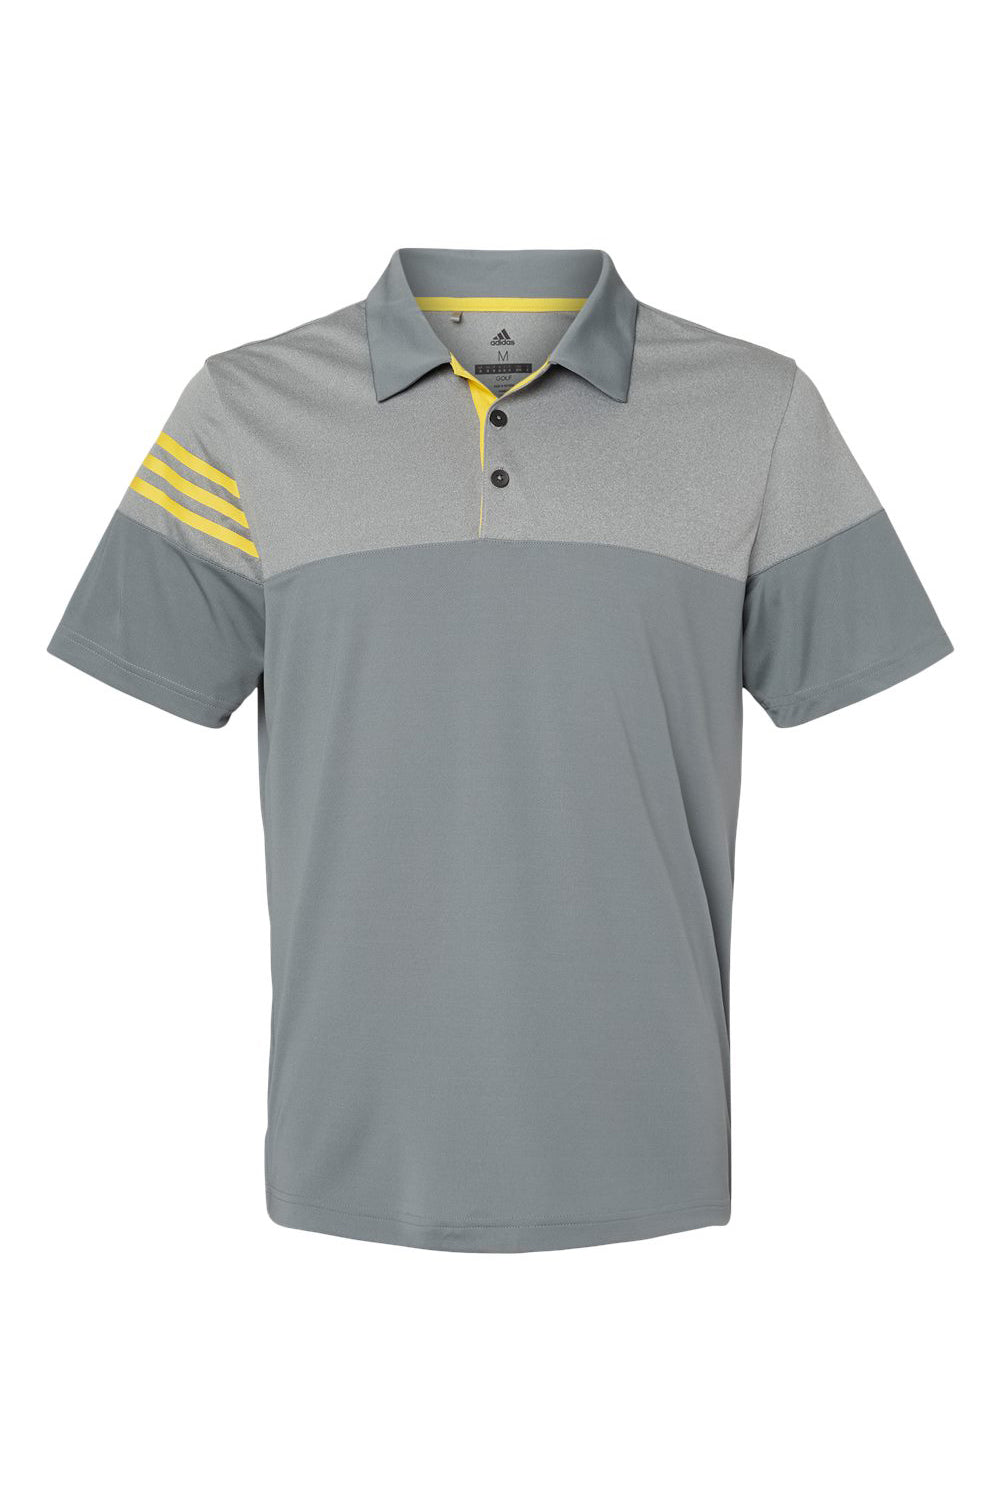 Adidas A213 Mens 3 Stripes Colorblock Moisture Wicking Short Sleeve Polo Shirt Vista Grey/Yellow Flat Front